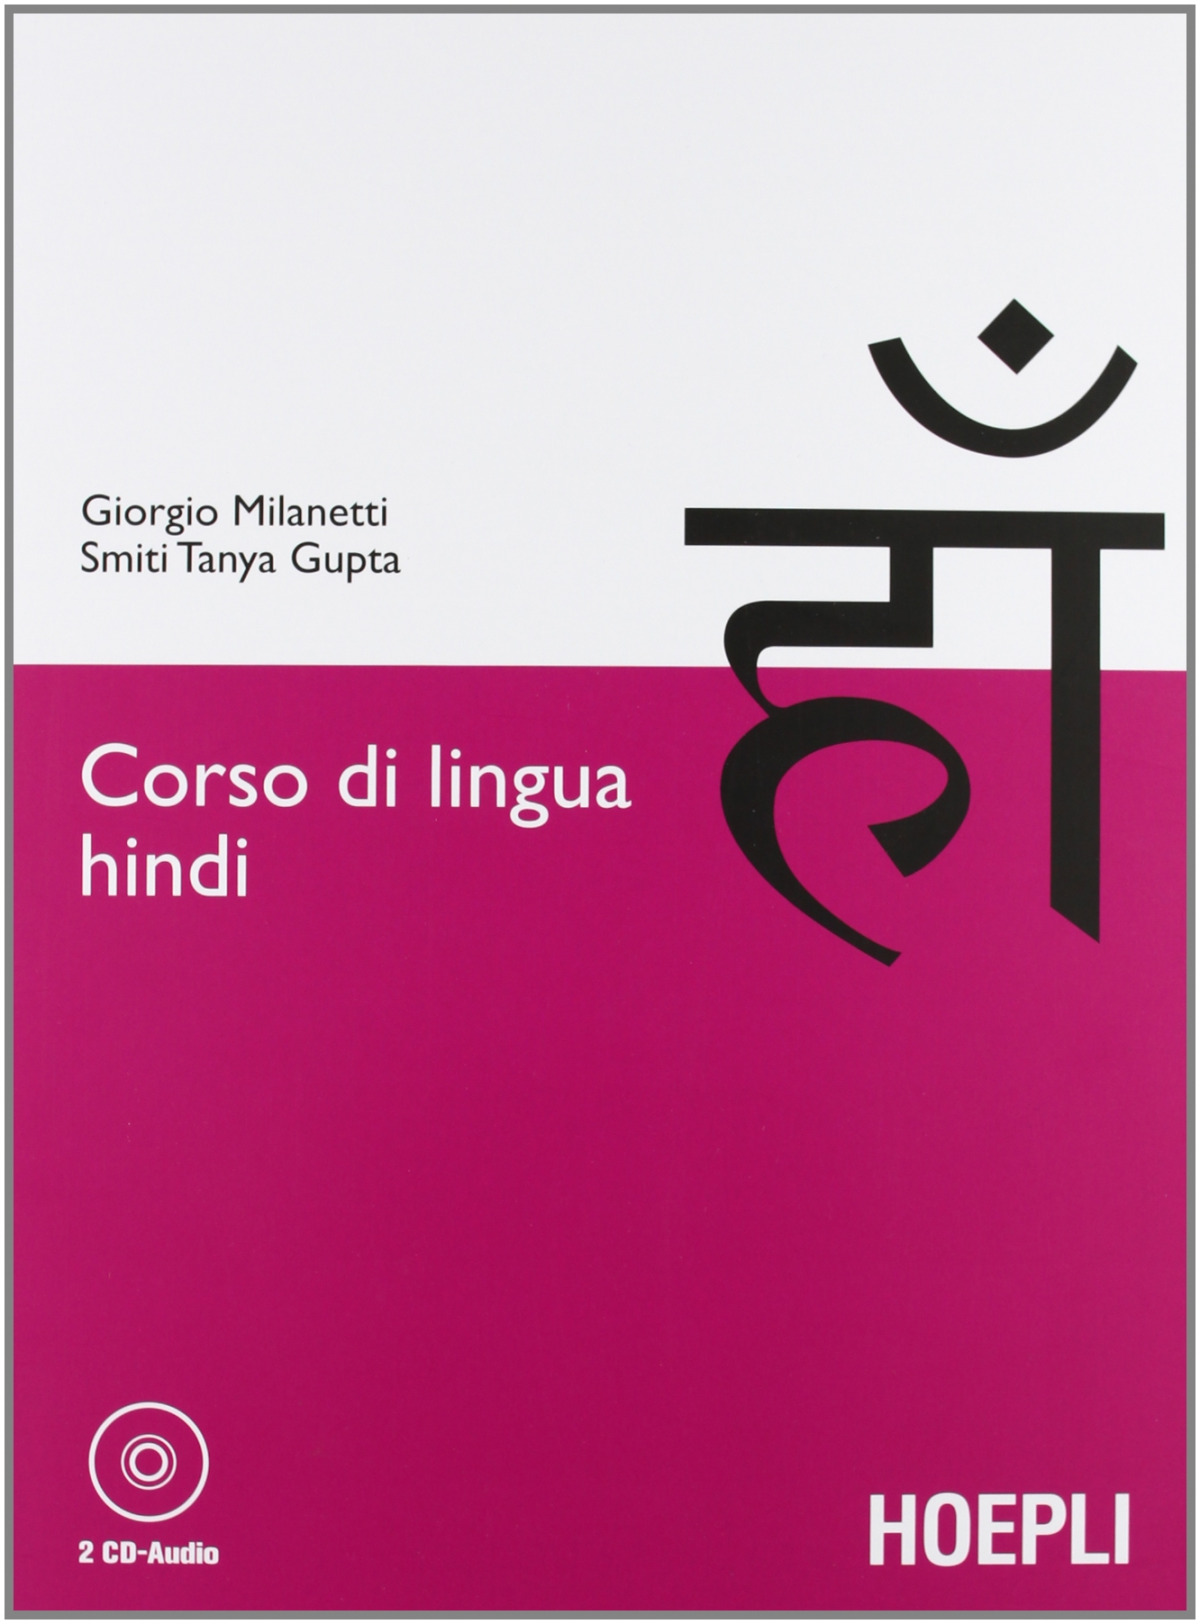 Corso di lingua hindi - Vv.Aa.